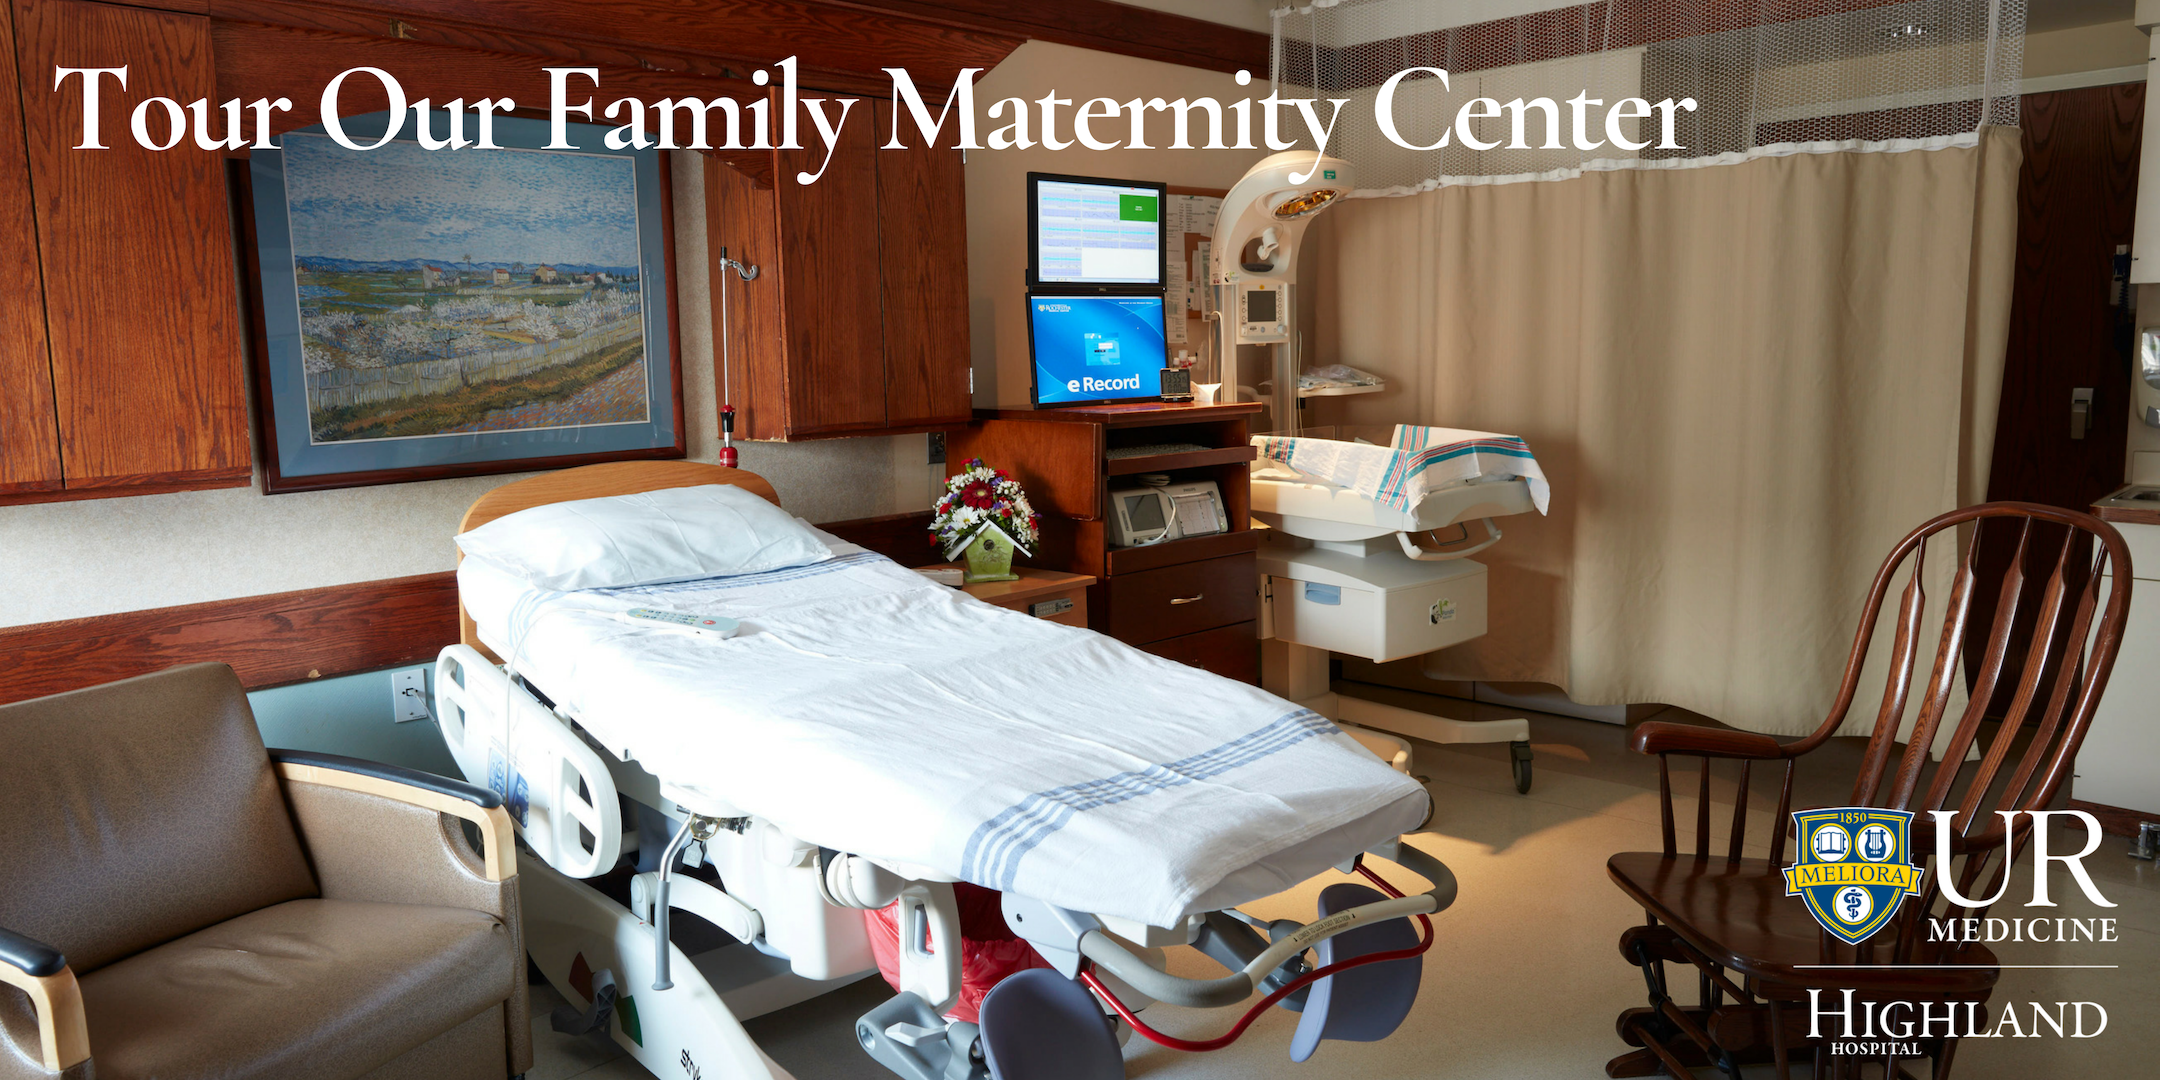 Family Maternity Center Tour - Wednesday, 7/8/20